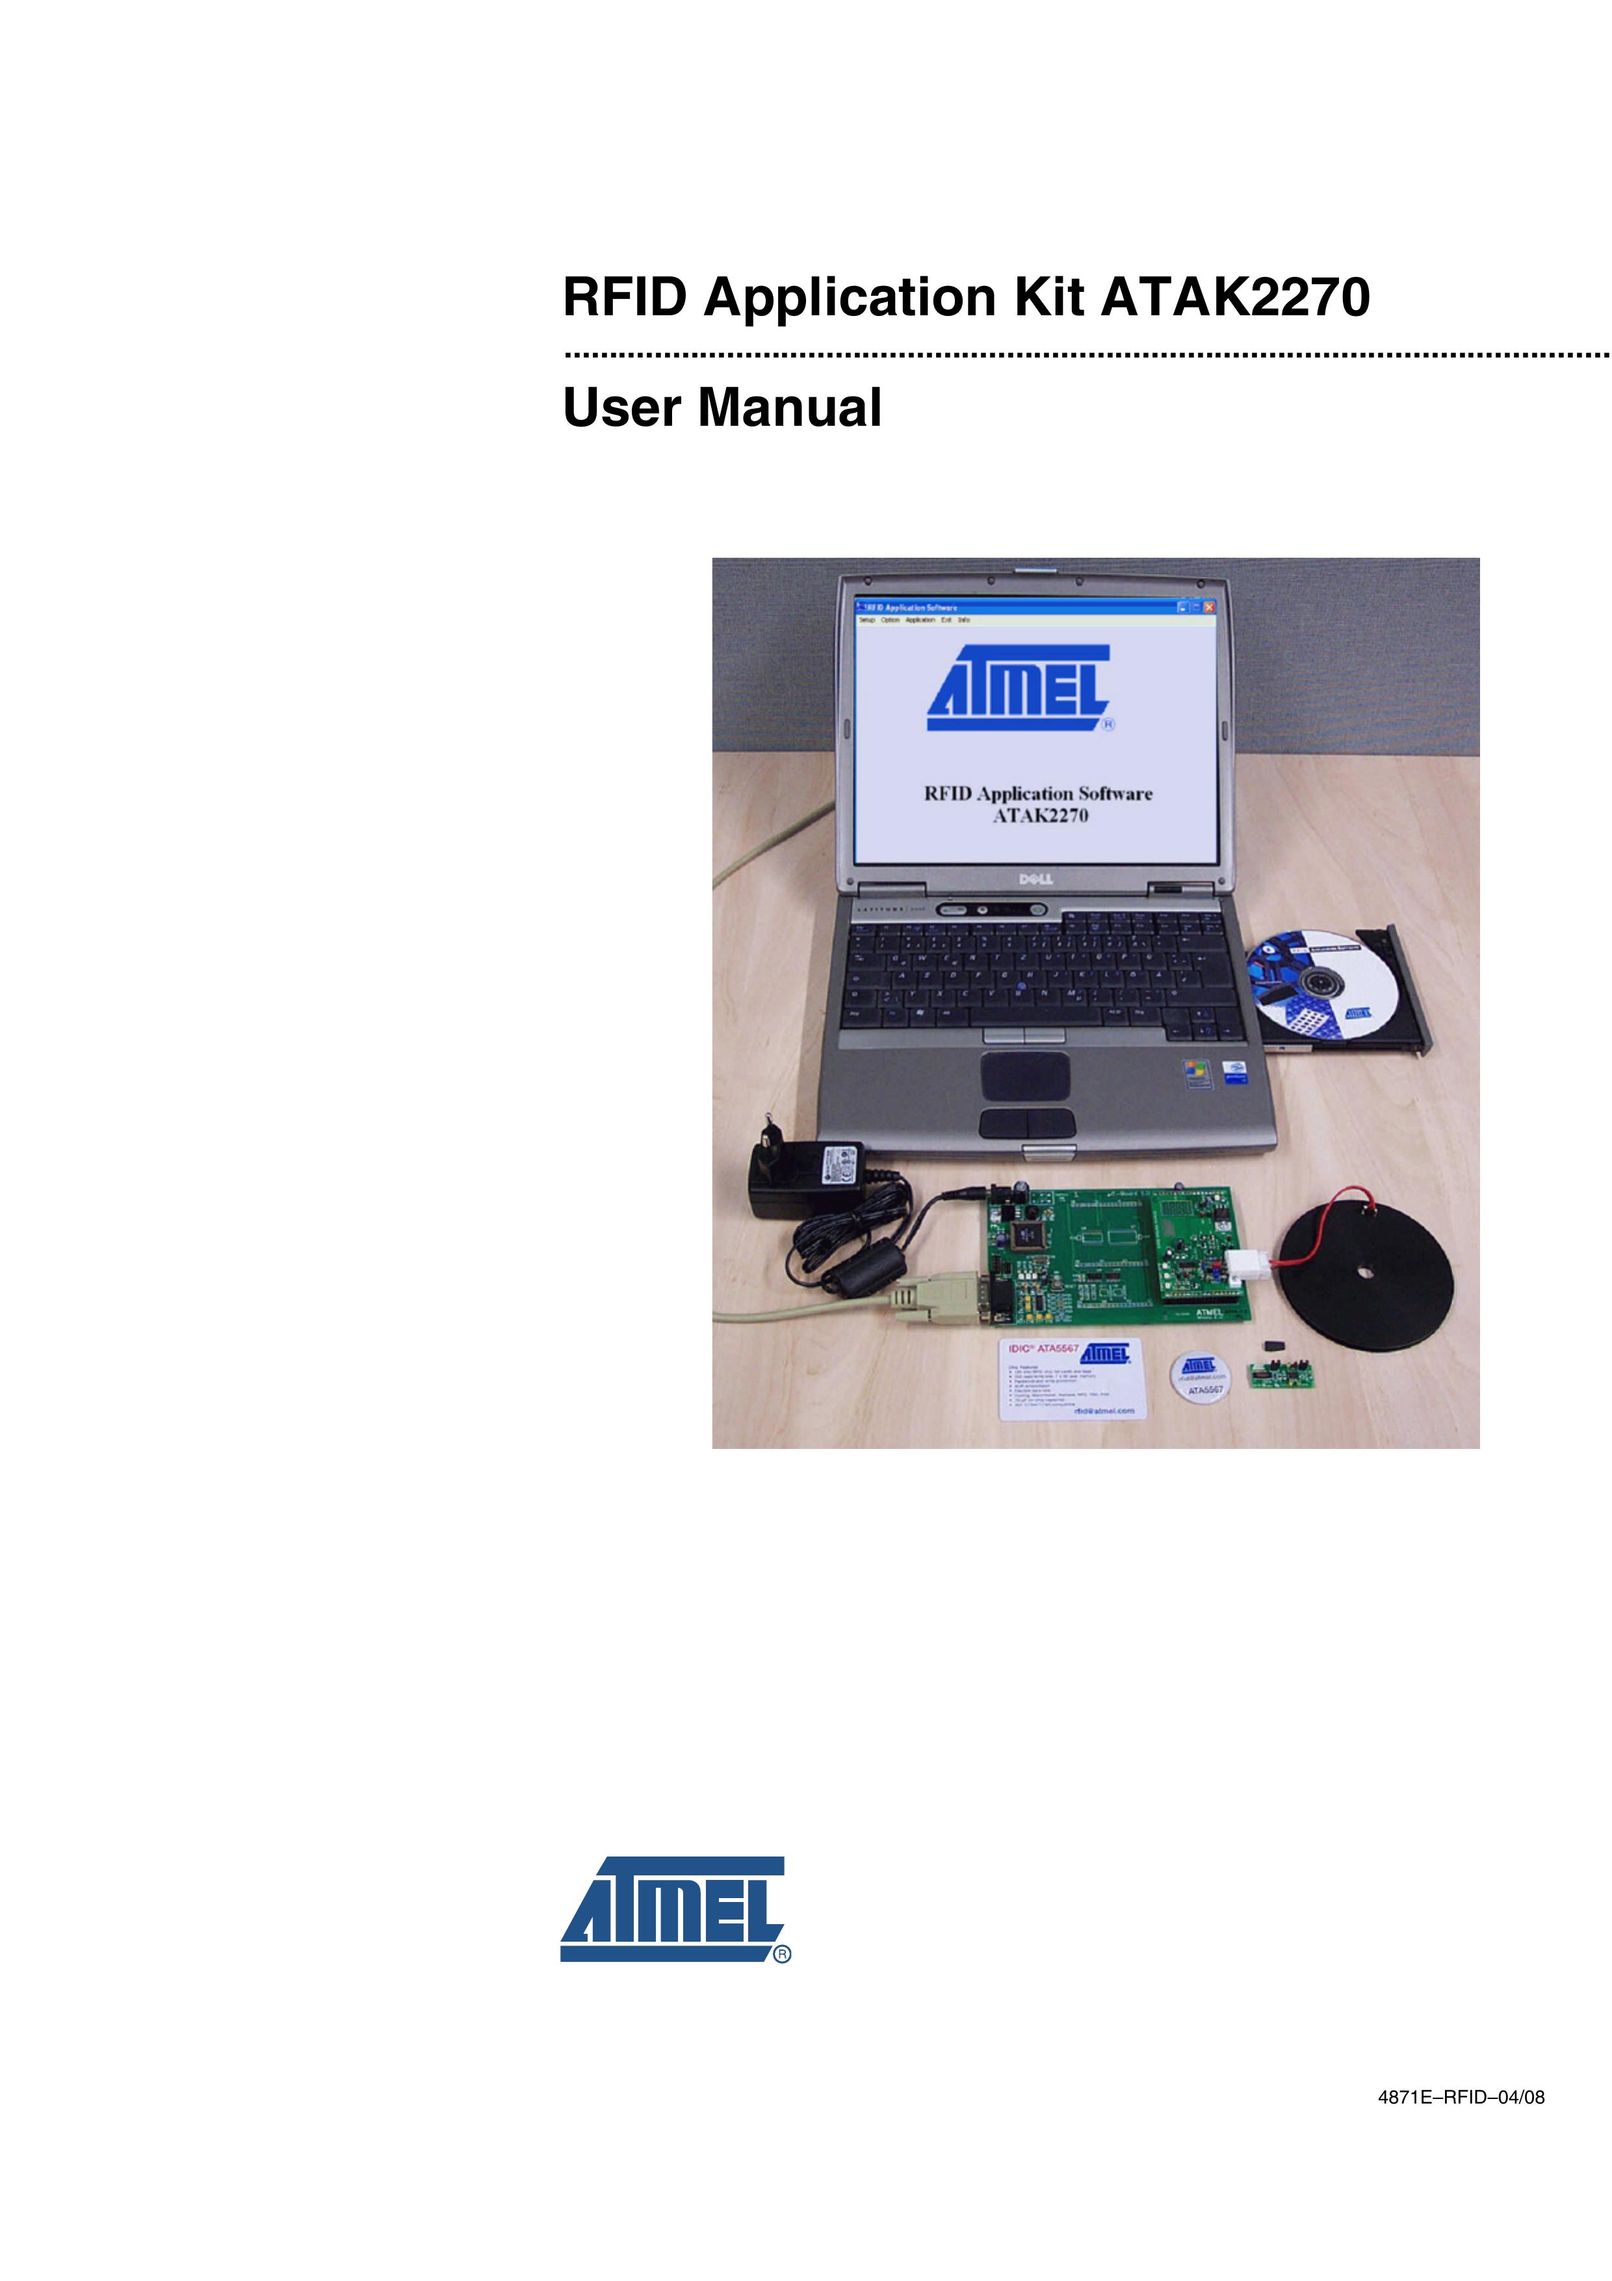 Atmel ATAK2270 Computer Hardware User Manual